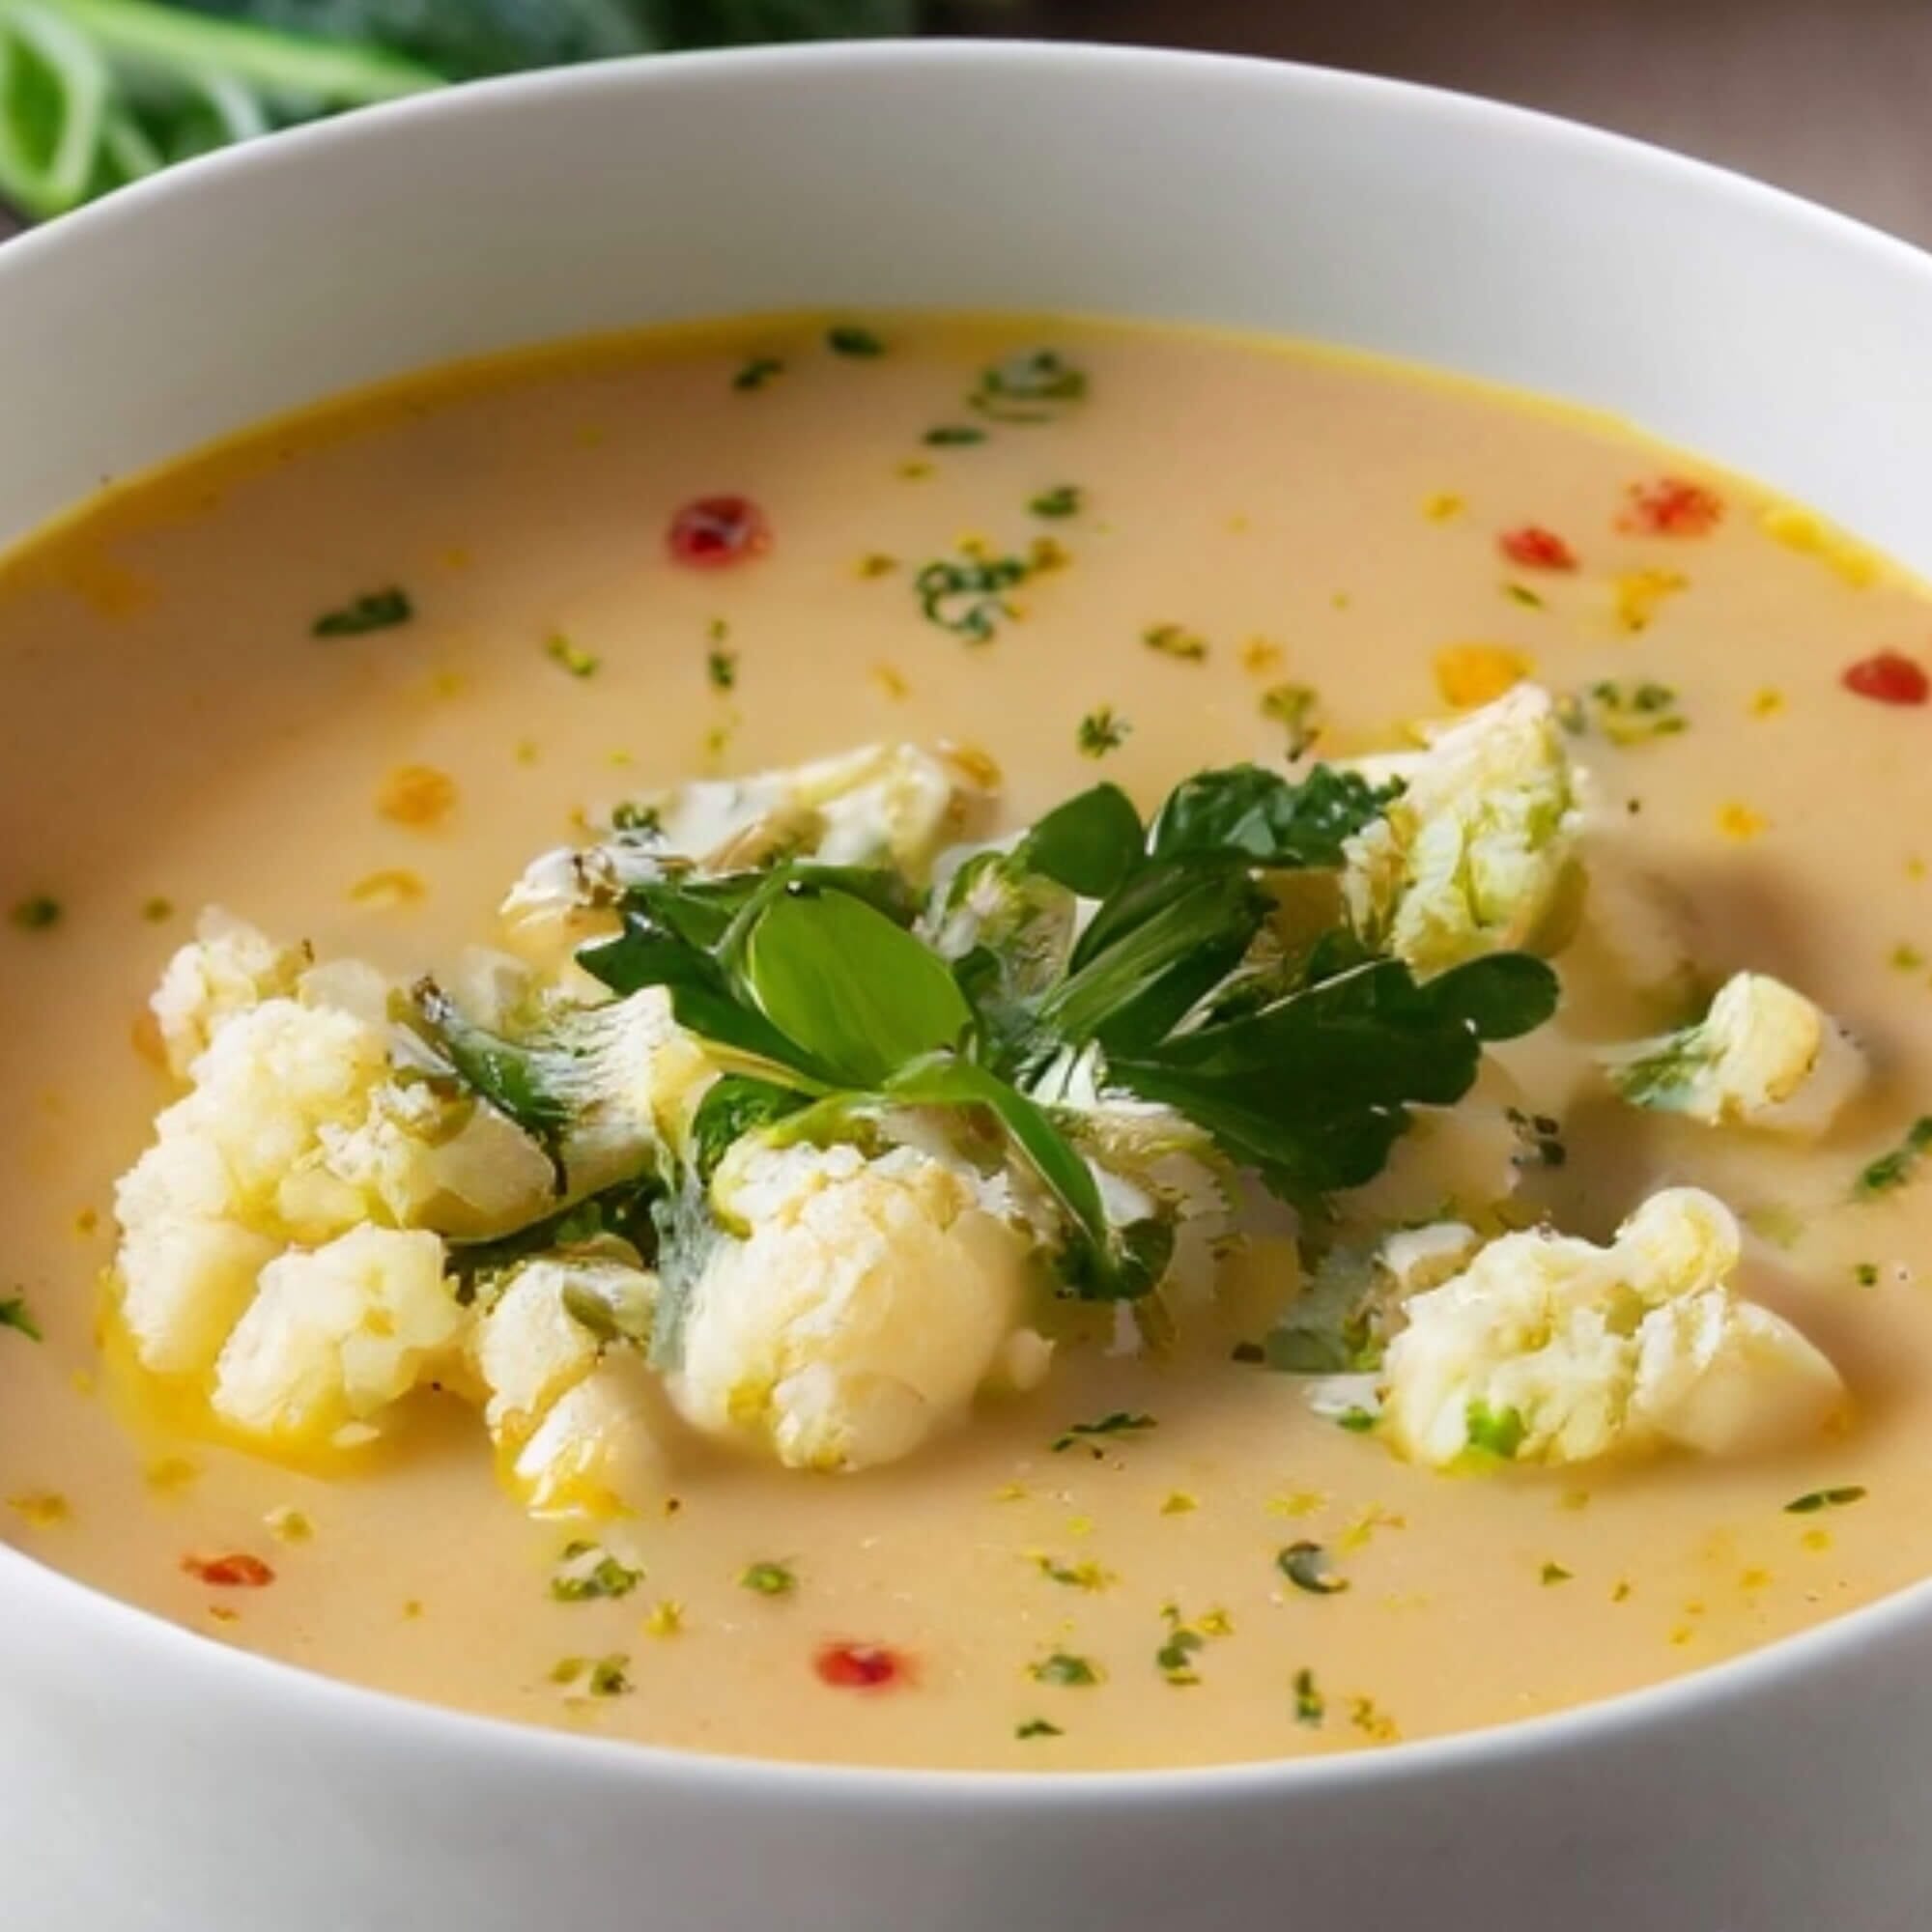 Healthy Vegan Cauliflower Soup - An Excellent Taste